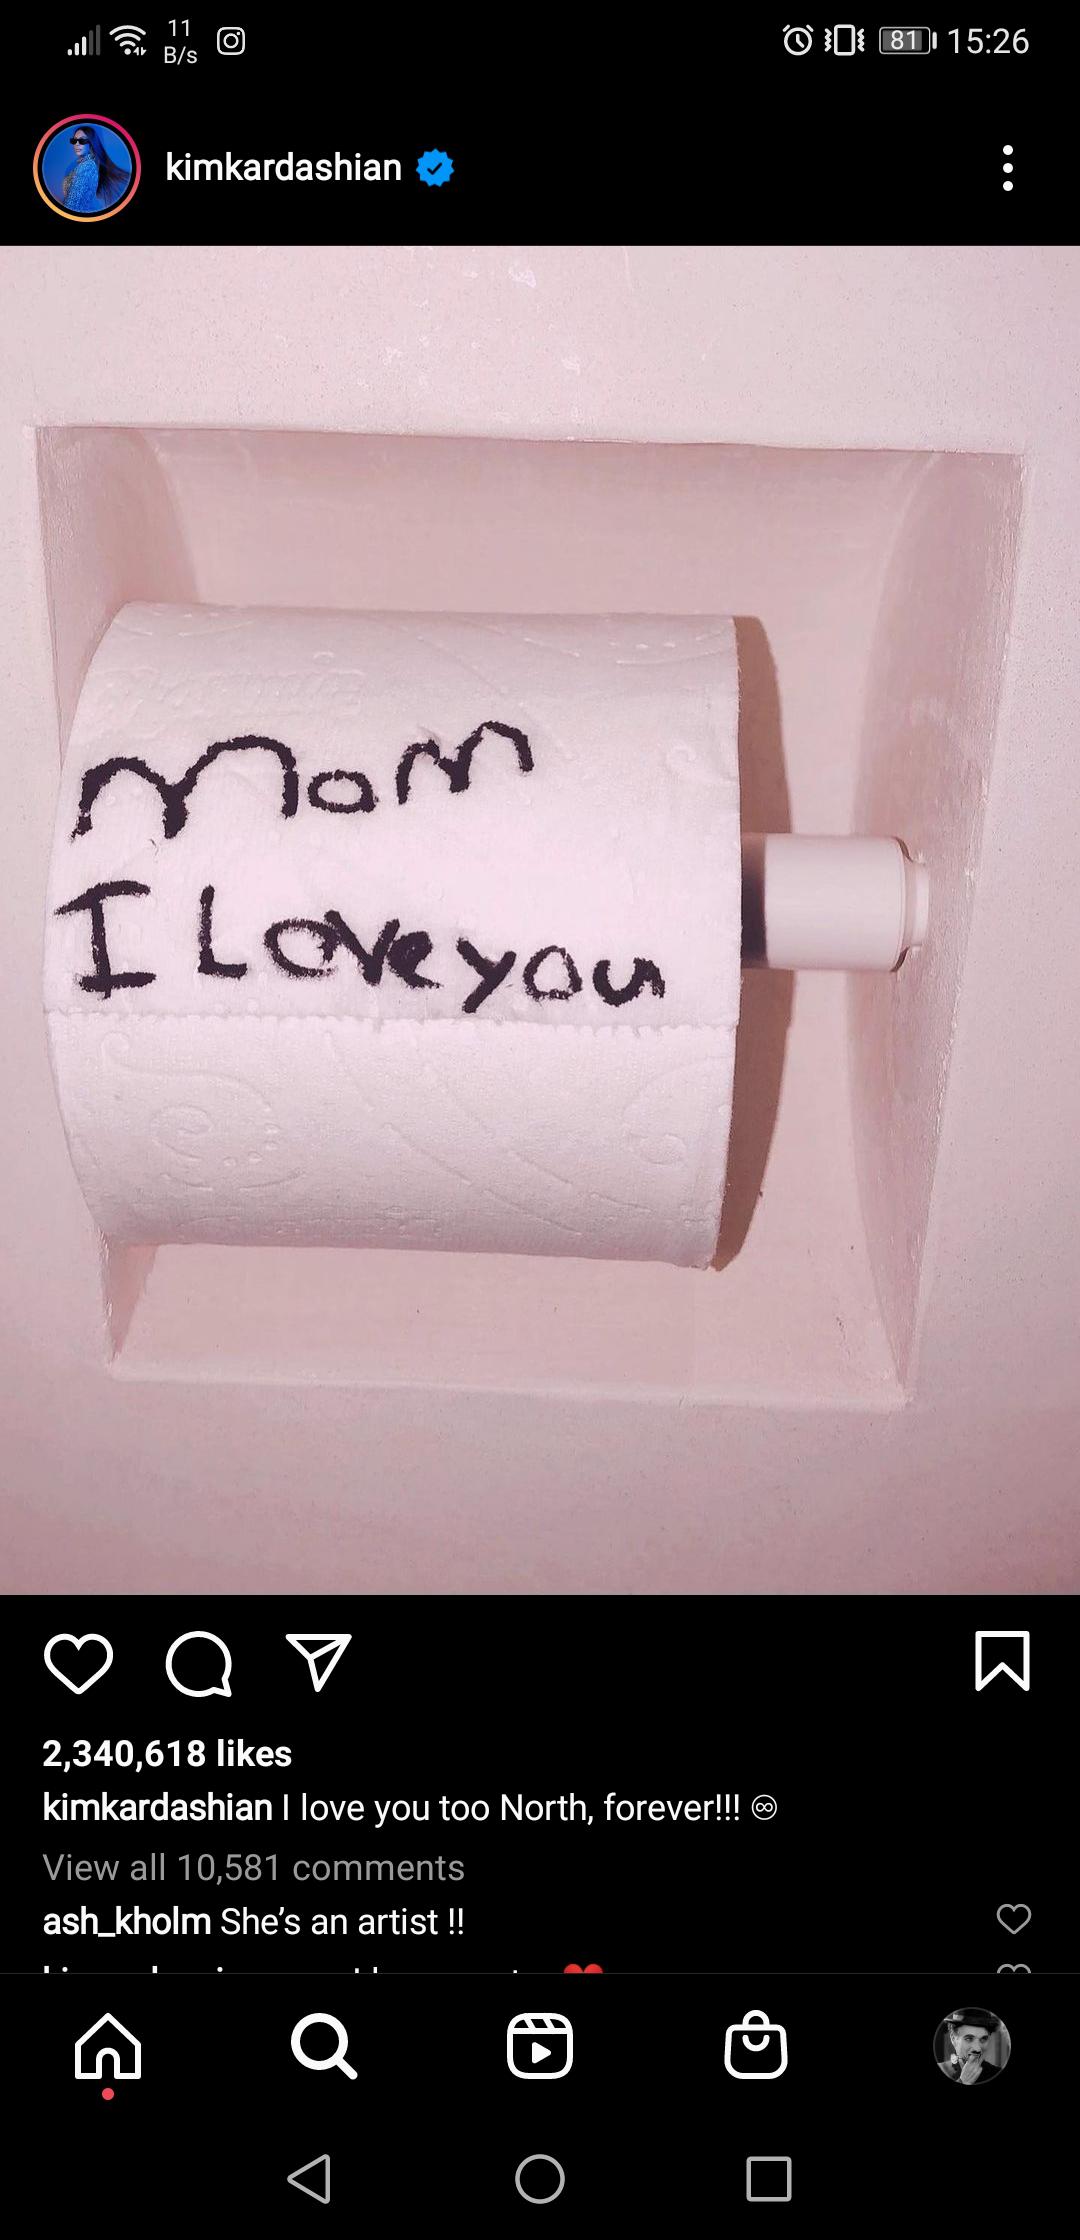 toilet paper - 11 6 BS O 81 kimkardashian Mam I love you a v W 2,340,618 kimkardashian I love you too North, forever!!! @ View all 10,581 ash_kholm She's an artist !! 30 Q 8